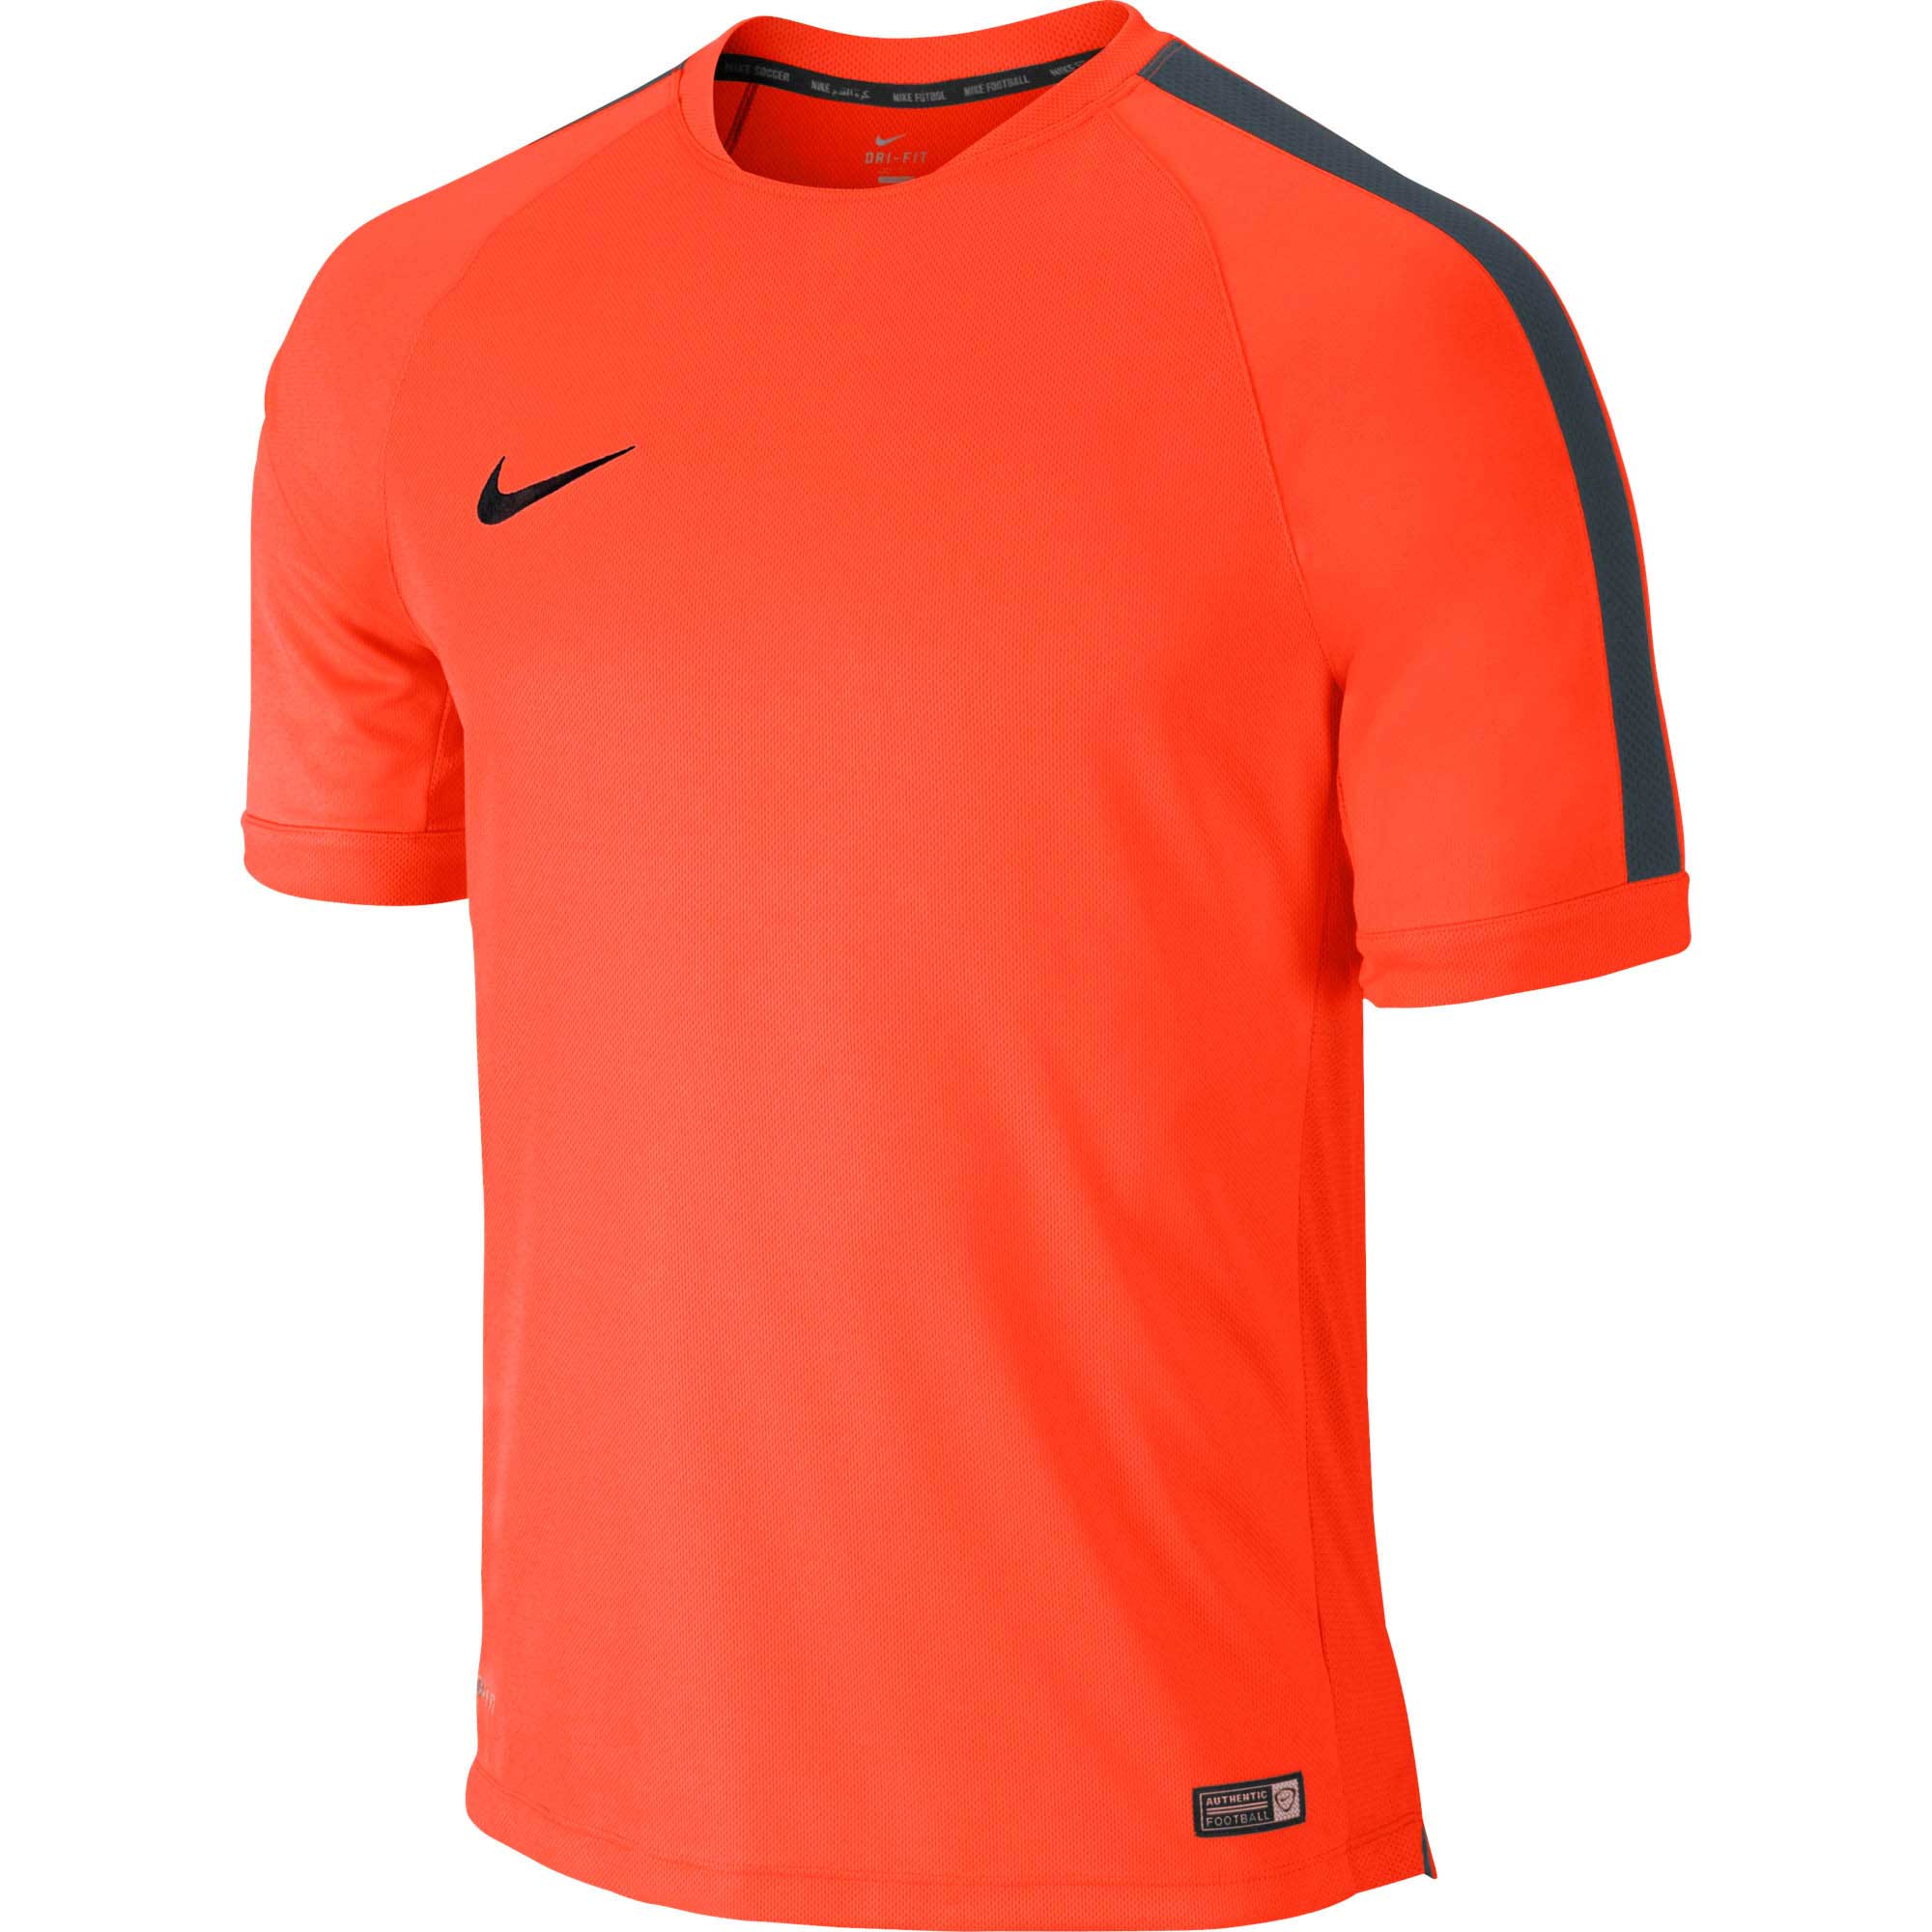 Nike Training Top - Nike Soccer Shirts